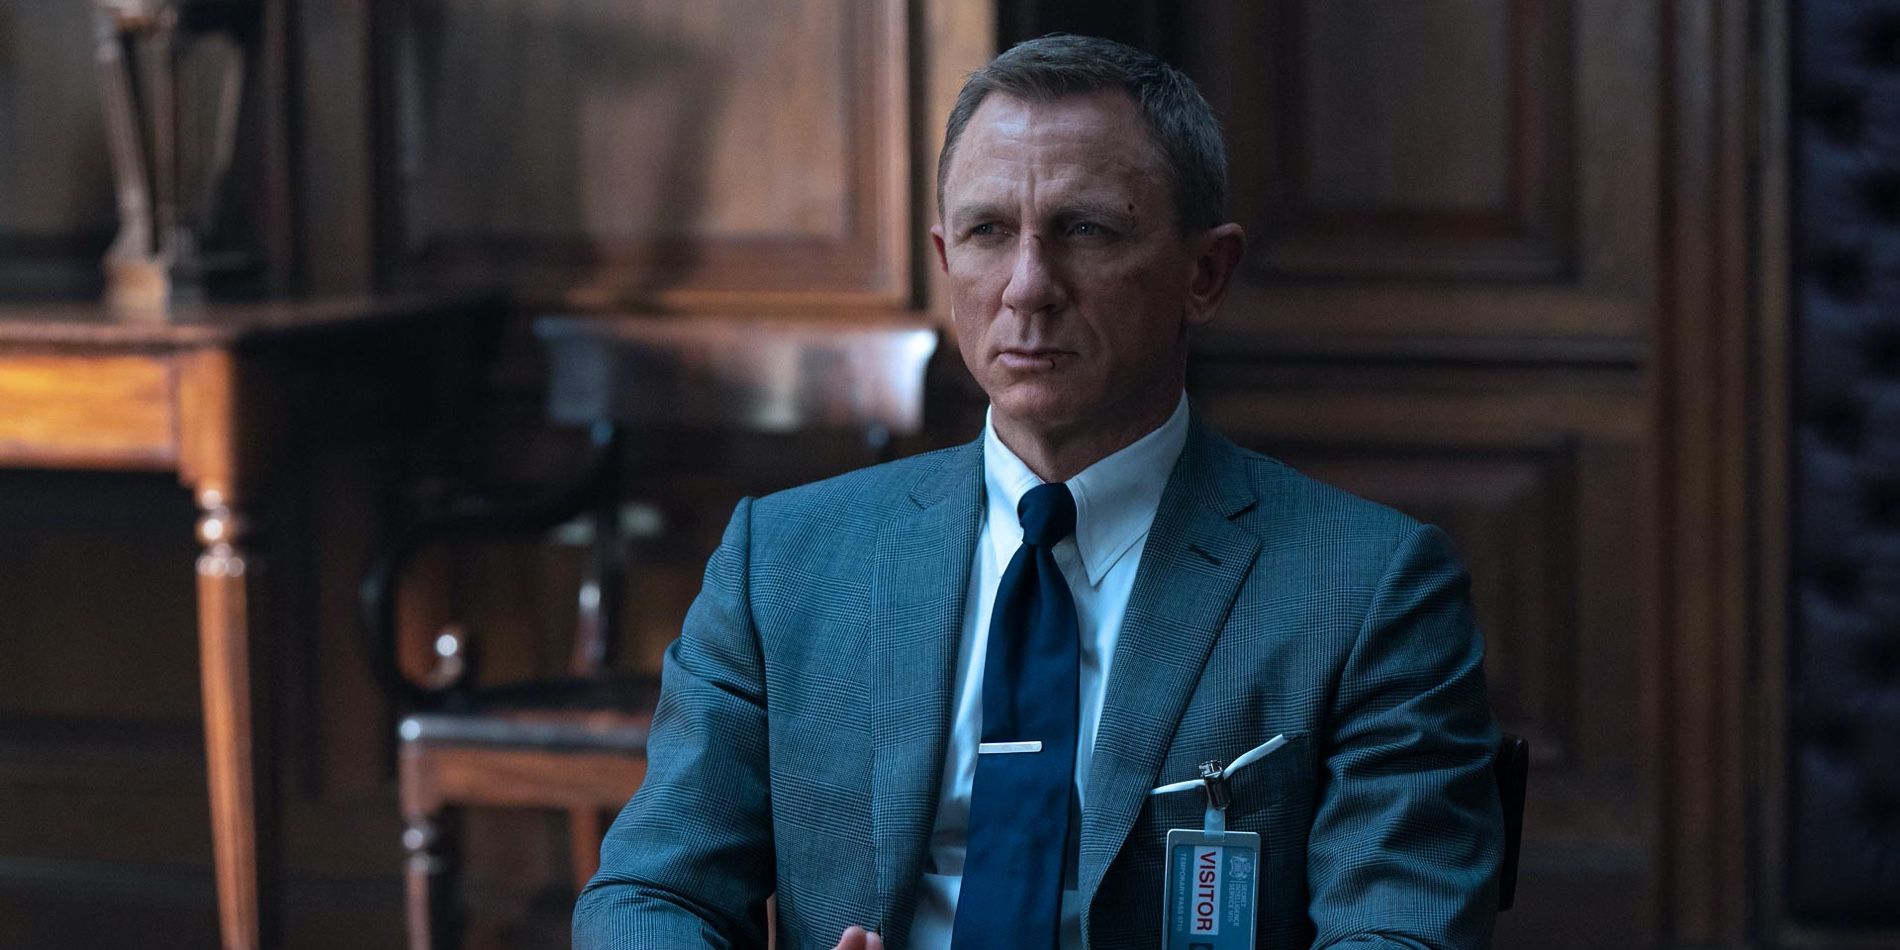 Daniel Craig as James Bond in M's office in No Time to Die